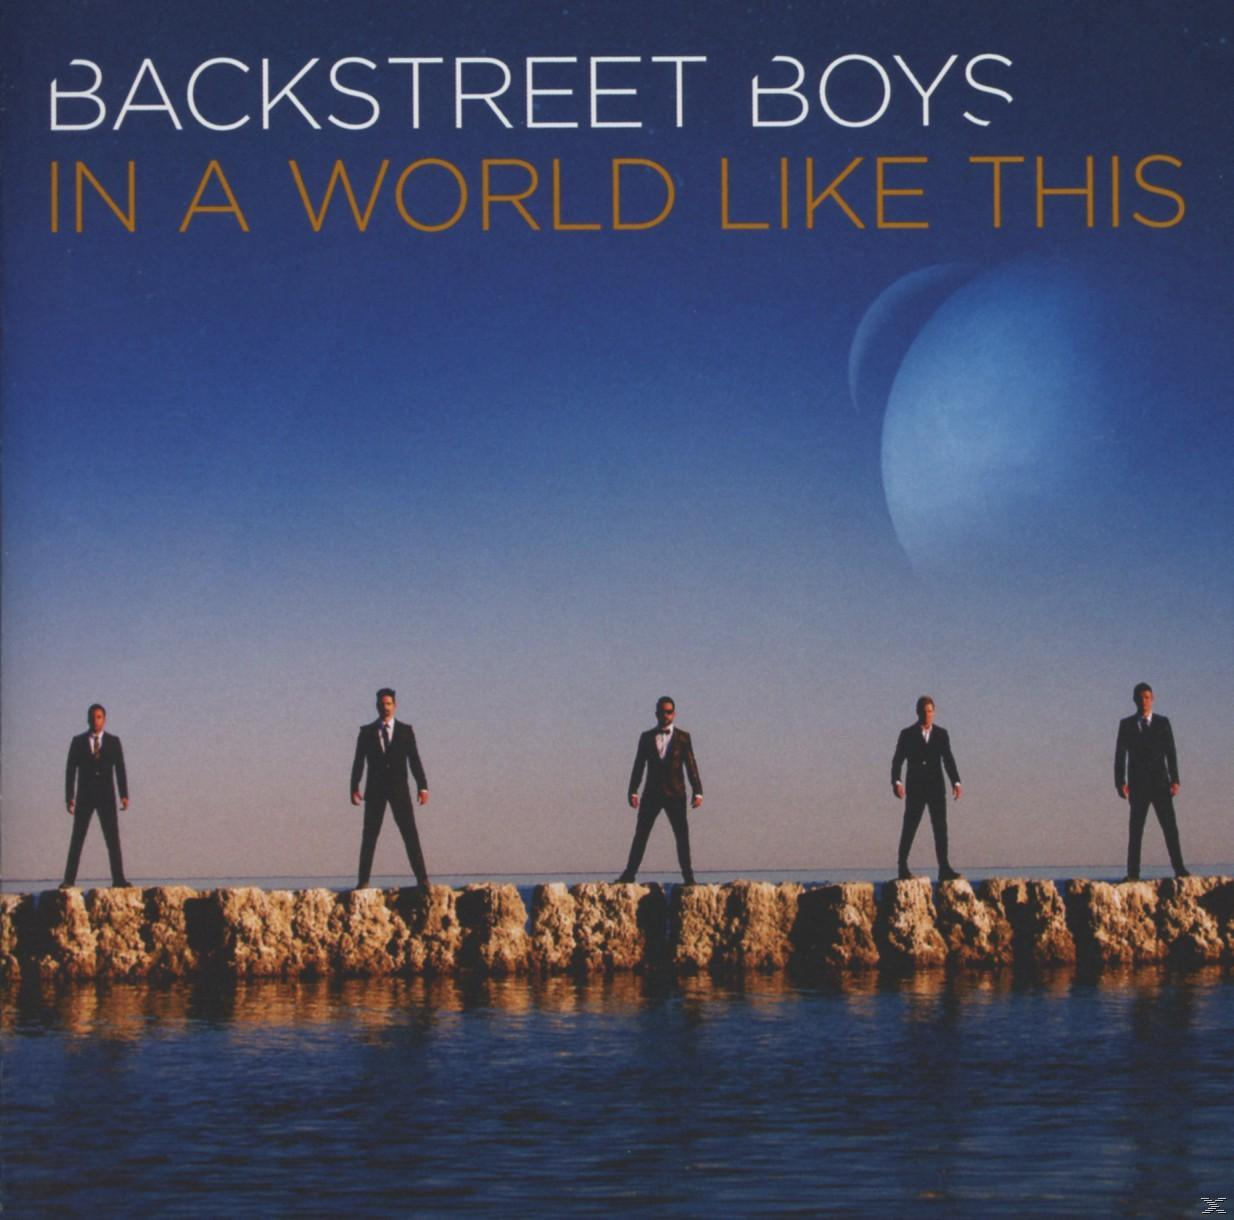 Backstreet - A THIS LIKE WORLD - IN Boys (CD)